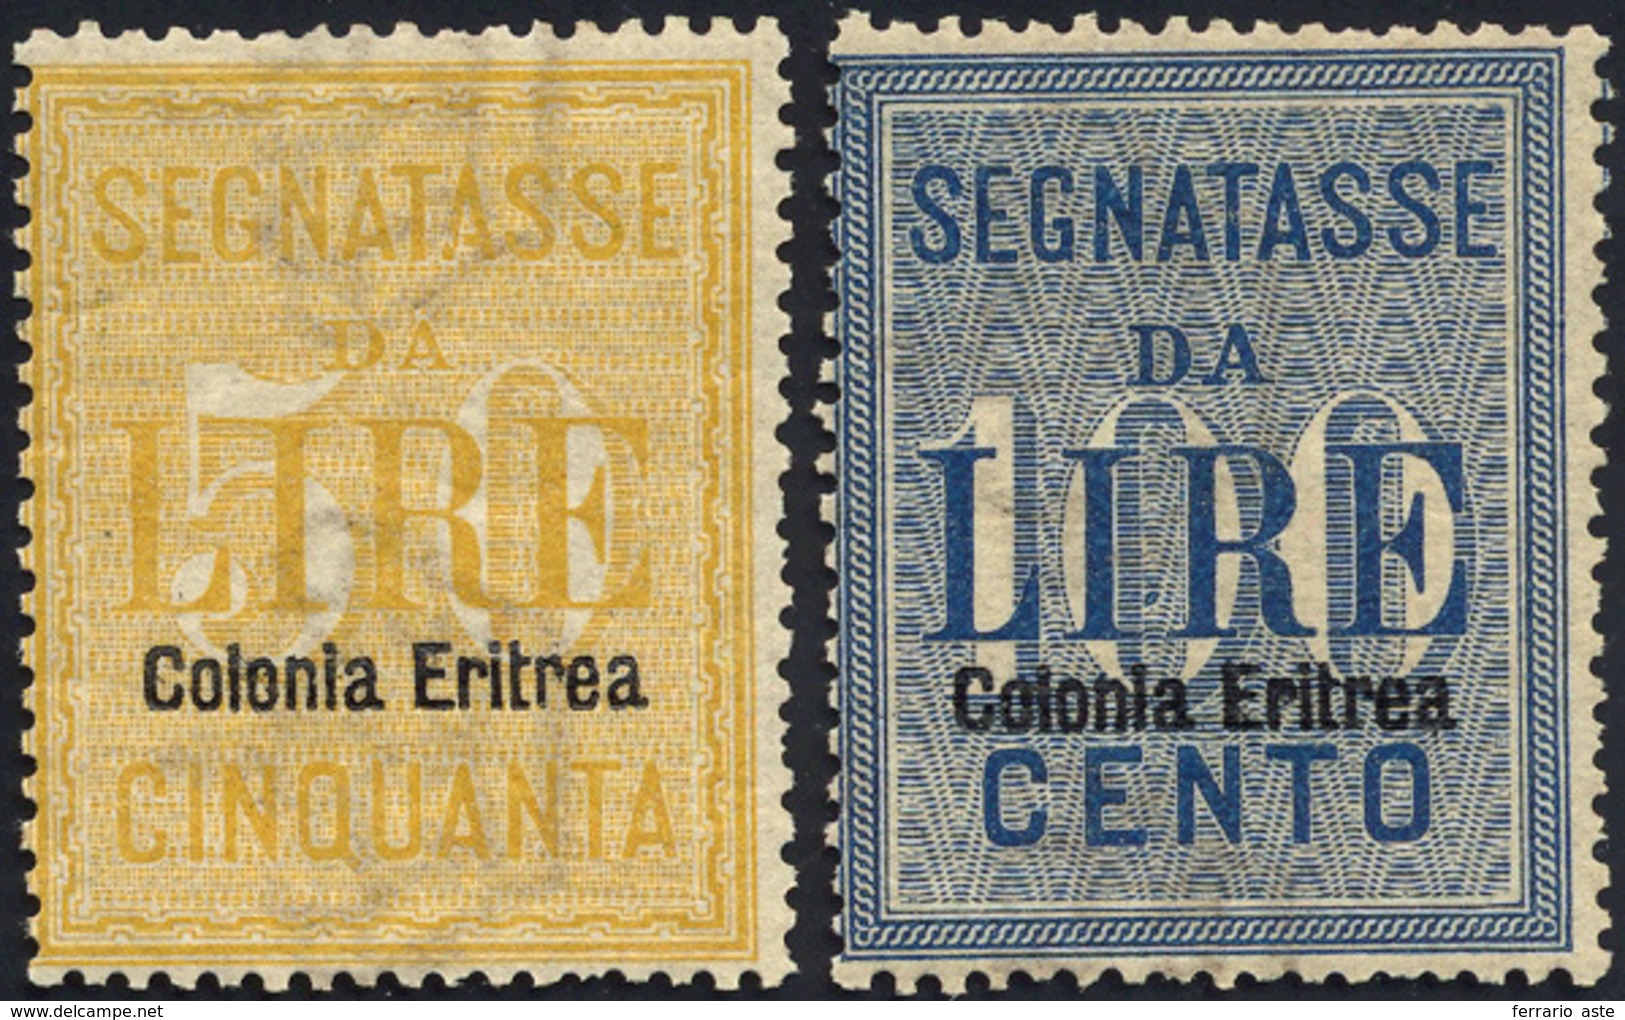 SEGNATASSE 1903 - Alti Valori Soprastampati (12/13), Gomma Integra, Perfetti. Cert. Commerciale.... - Erythrée